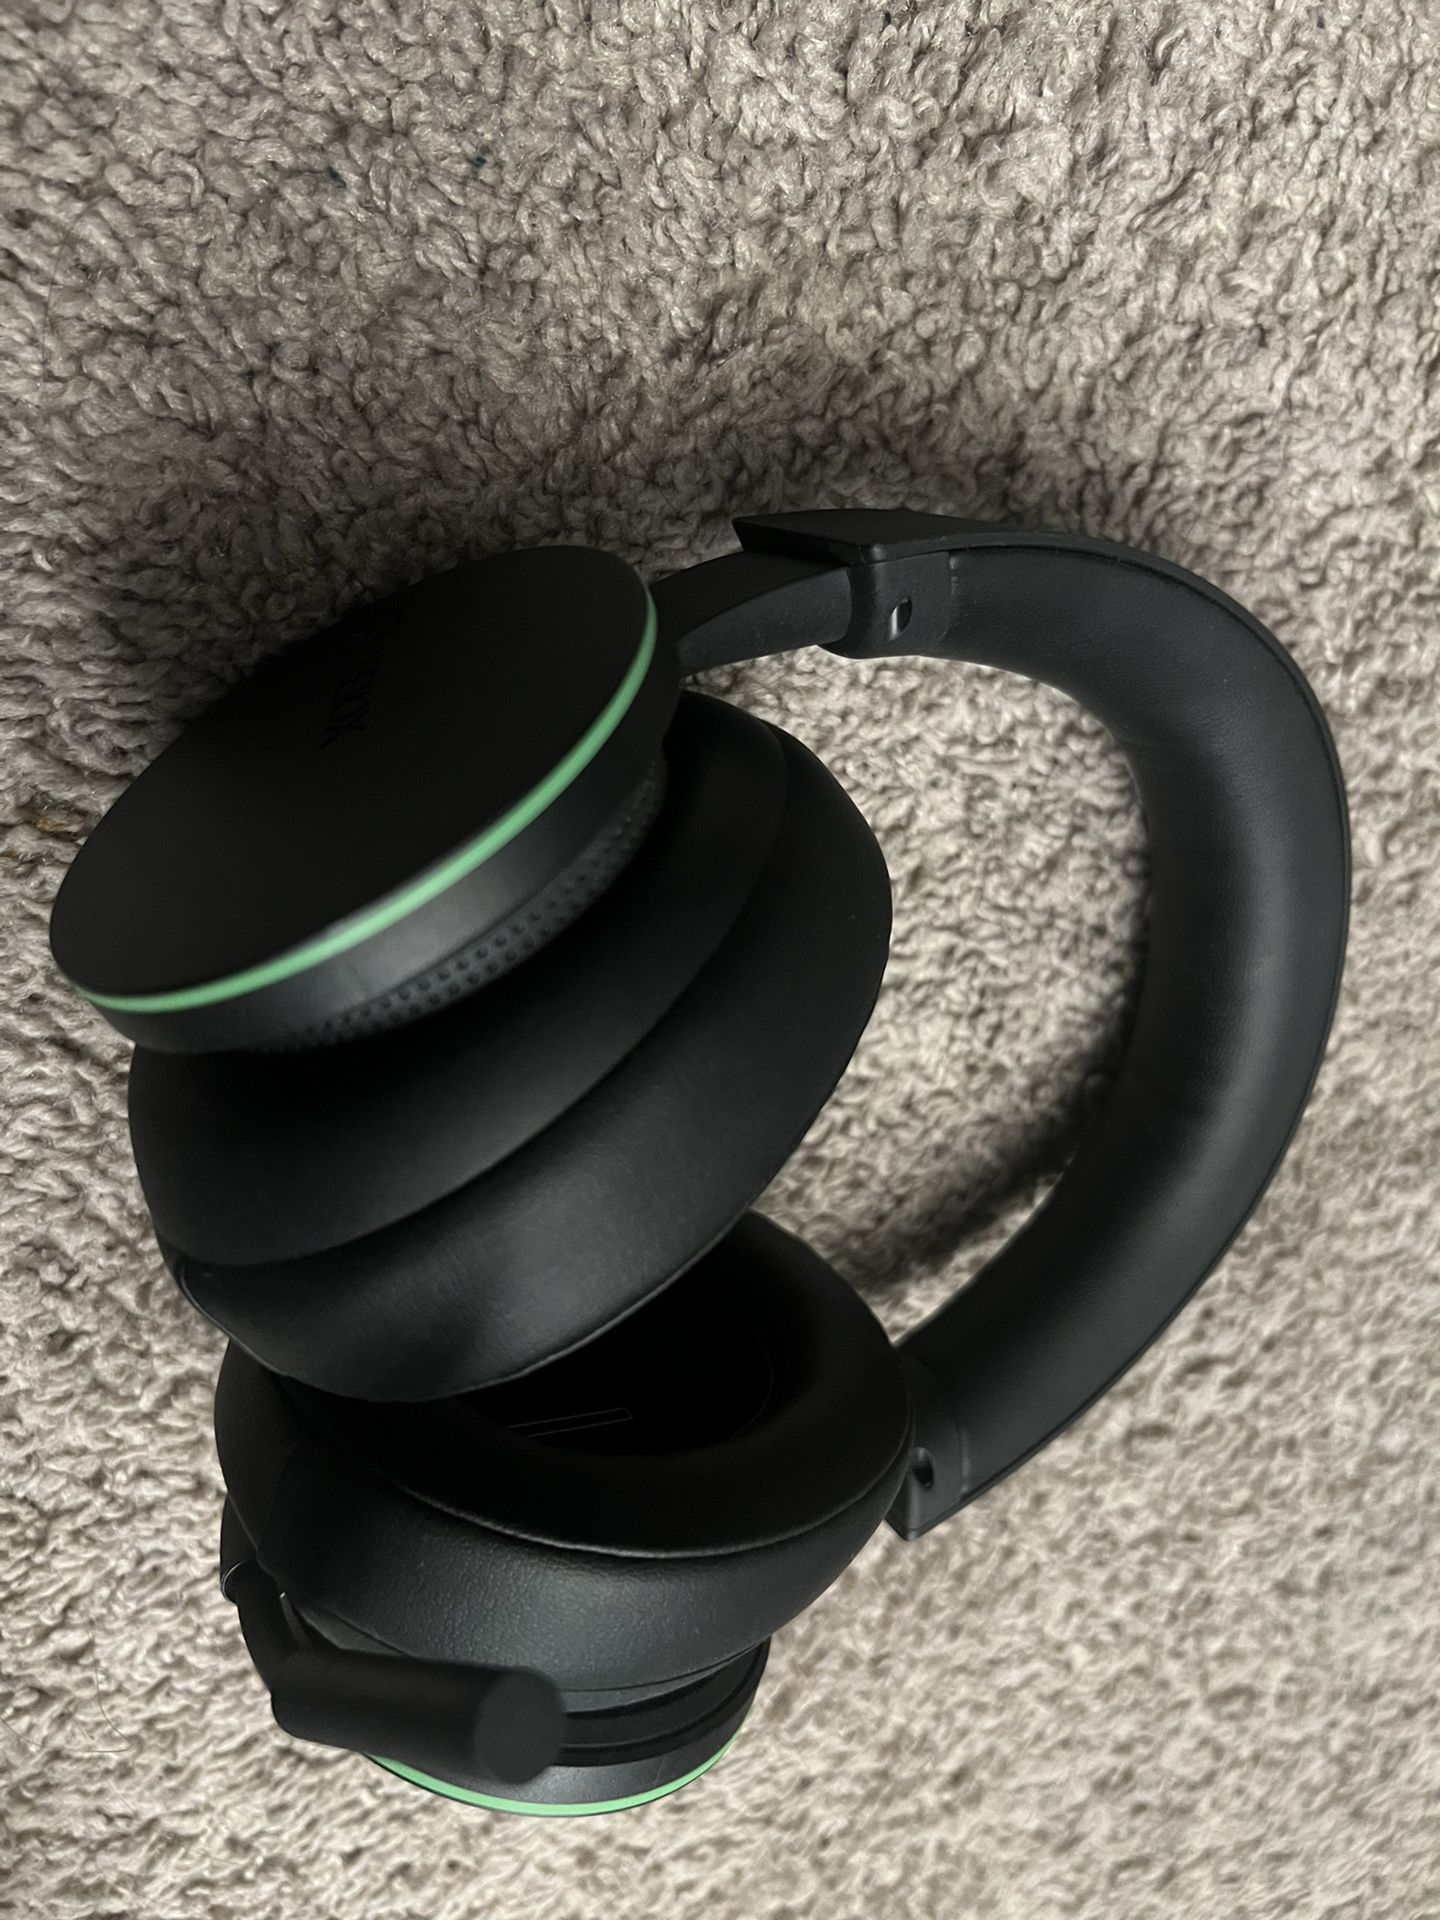 Xbox Bluetooth Headset 